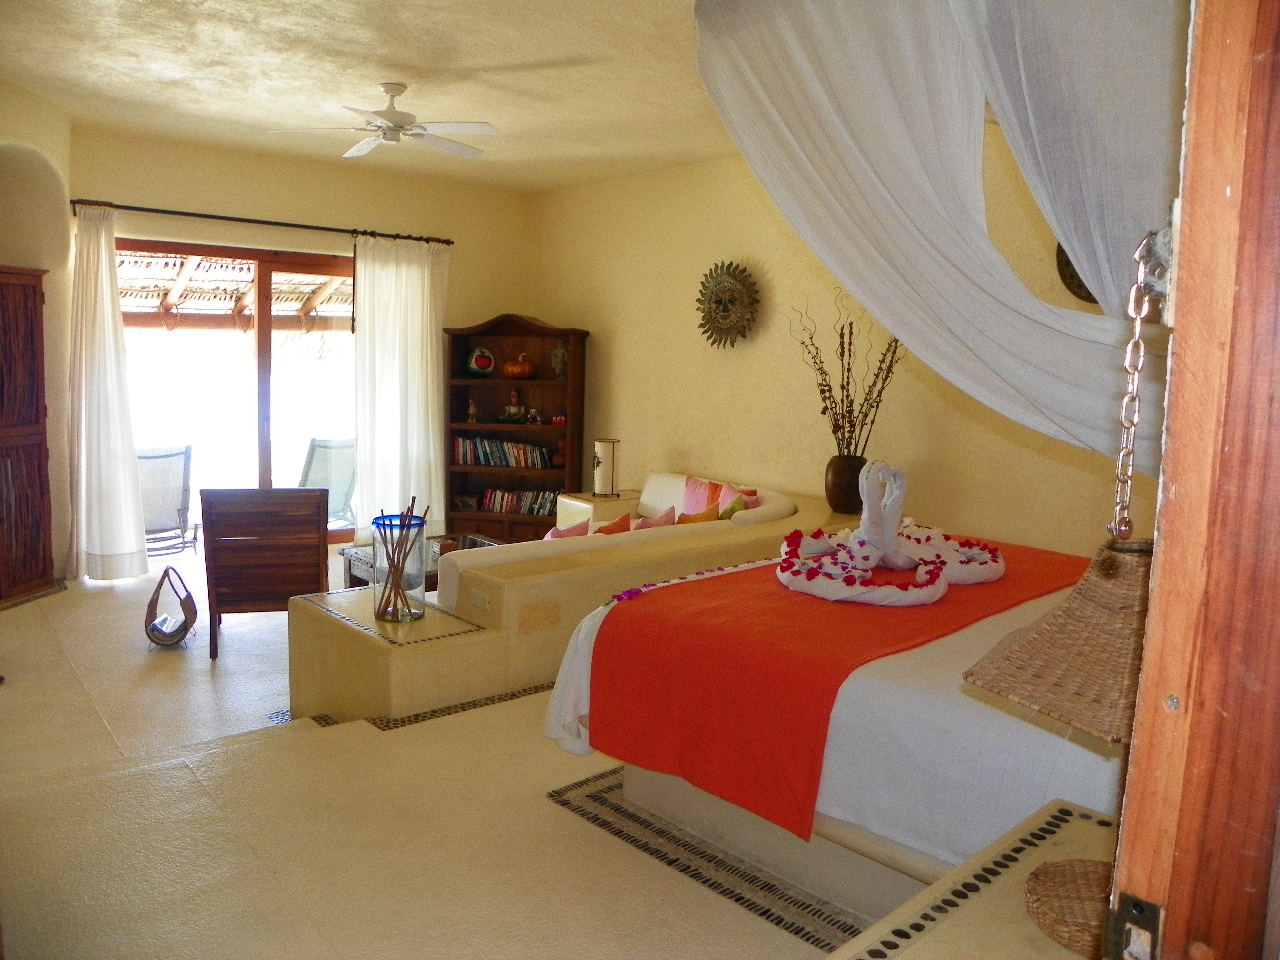 cinco-sentidos-hotel-zihuatanejo-mexico-properties-homes-for-sale-bedroom-living-room.jpeg